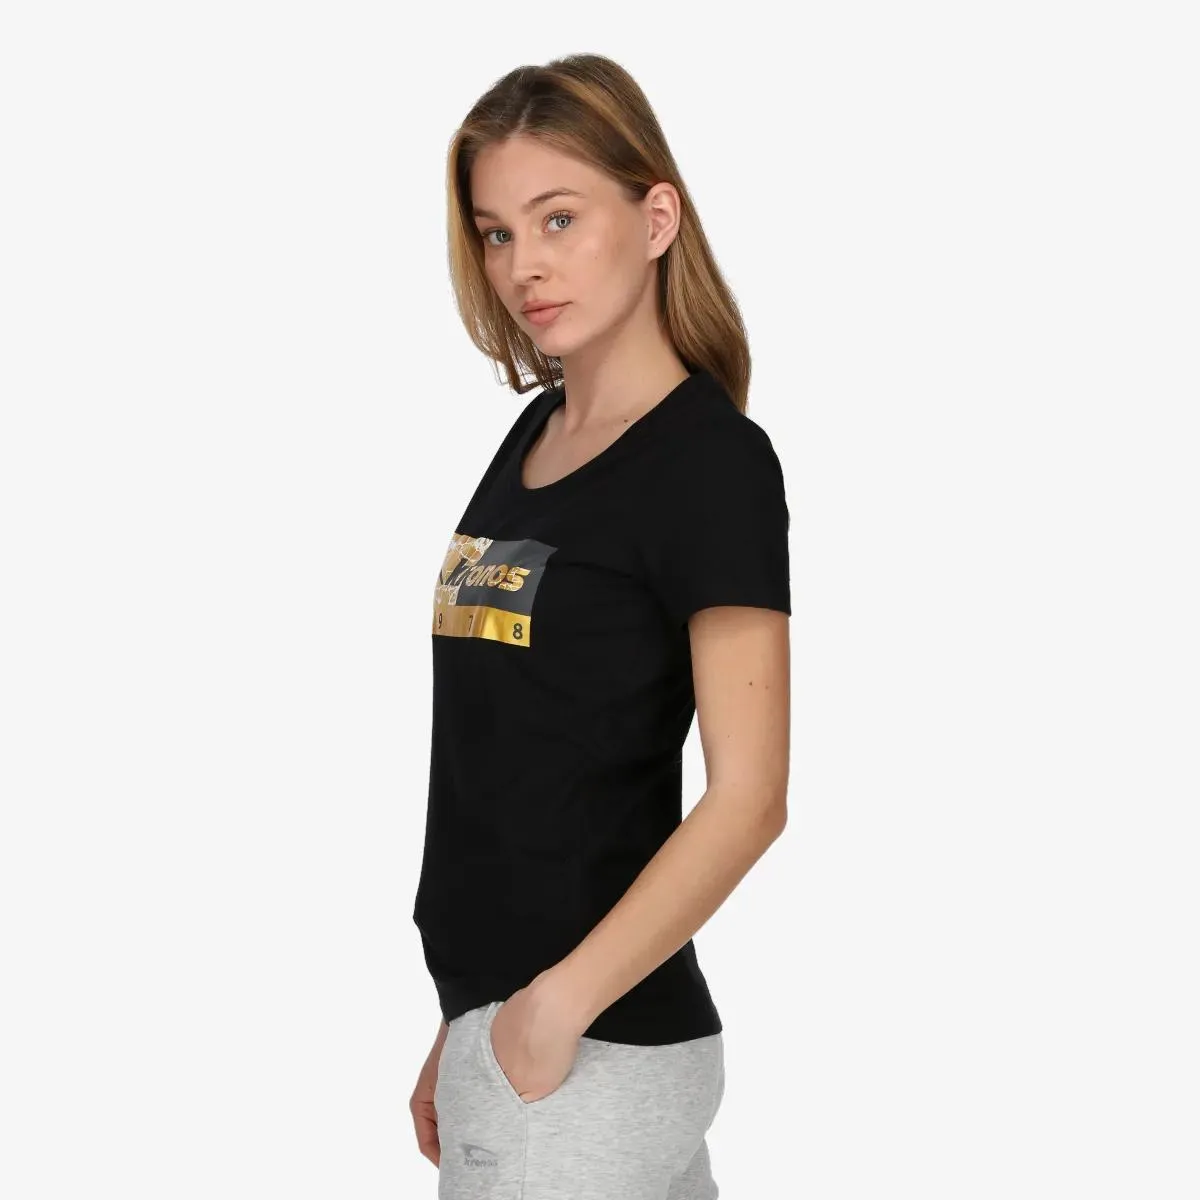 Kronos T-shirt LADIES T-SHIRT 